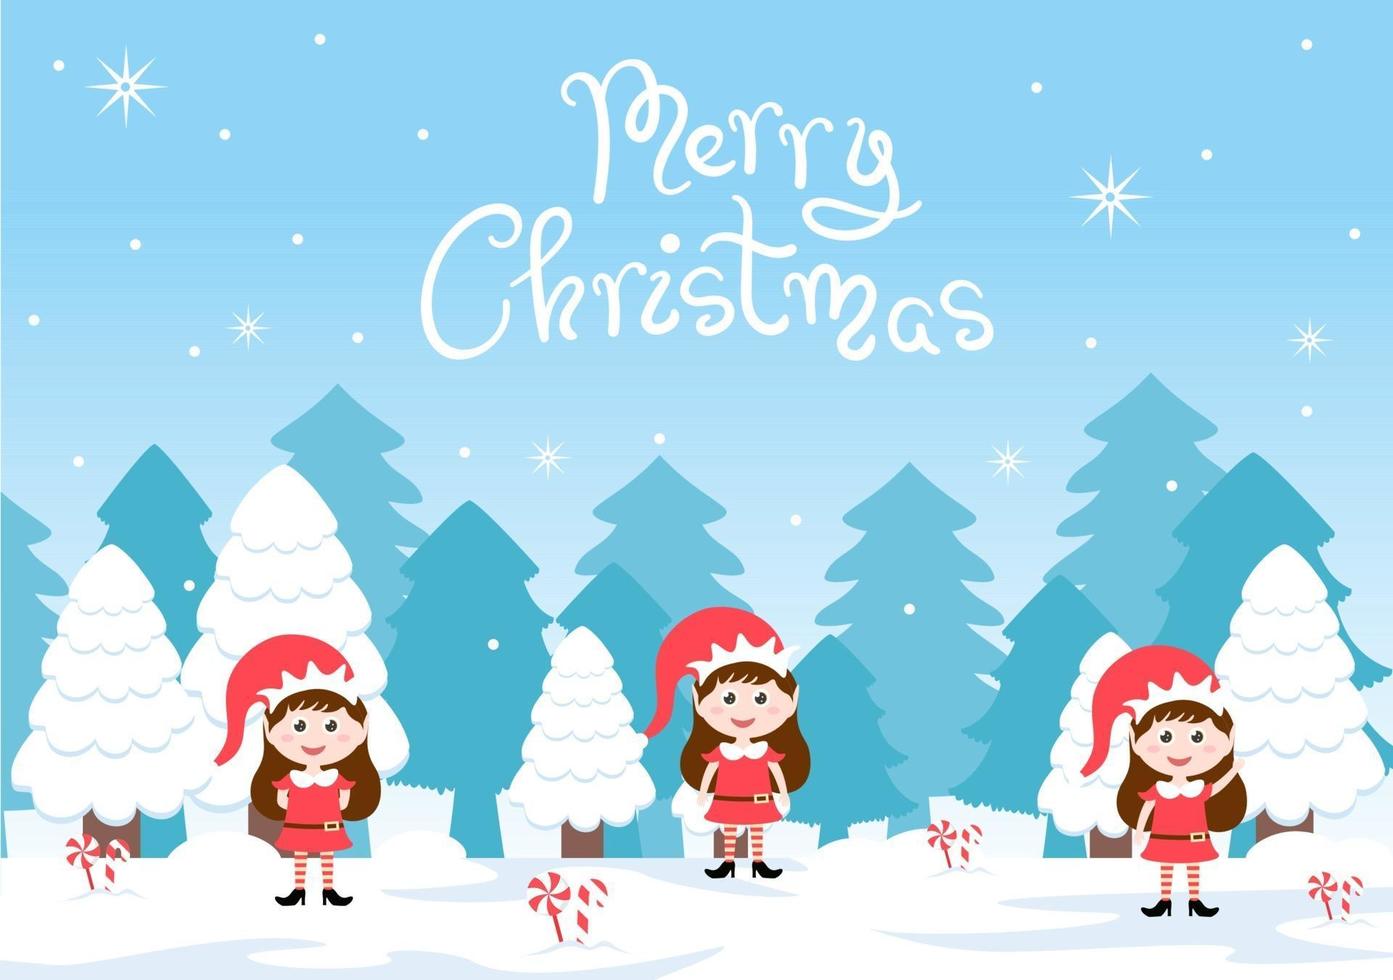 Merry Christmas Cute Cartoon Dwarf, Santa Claus And Elves